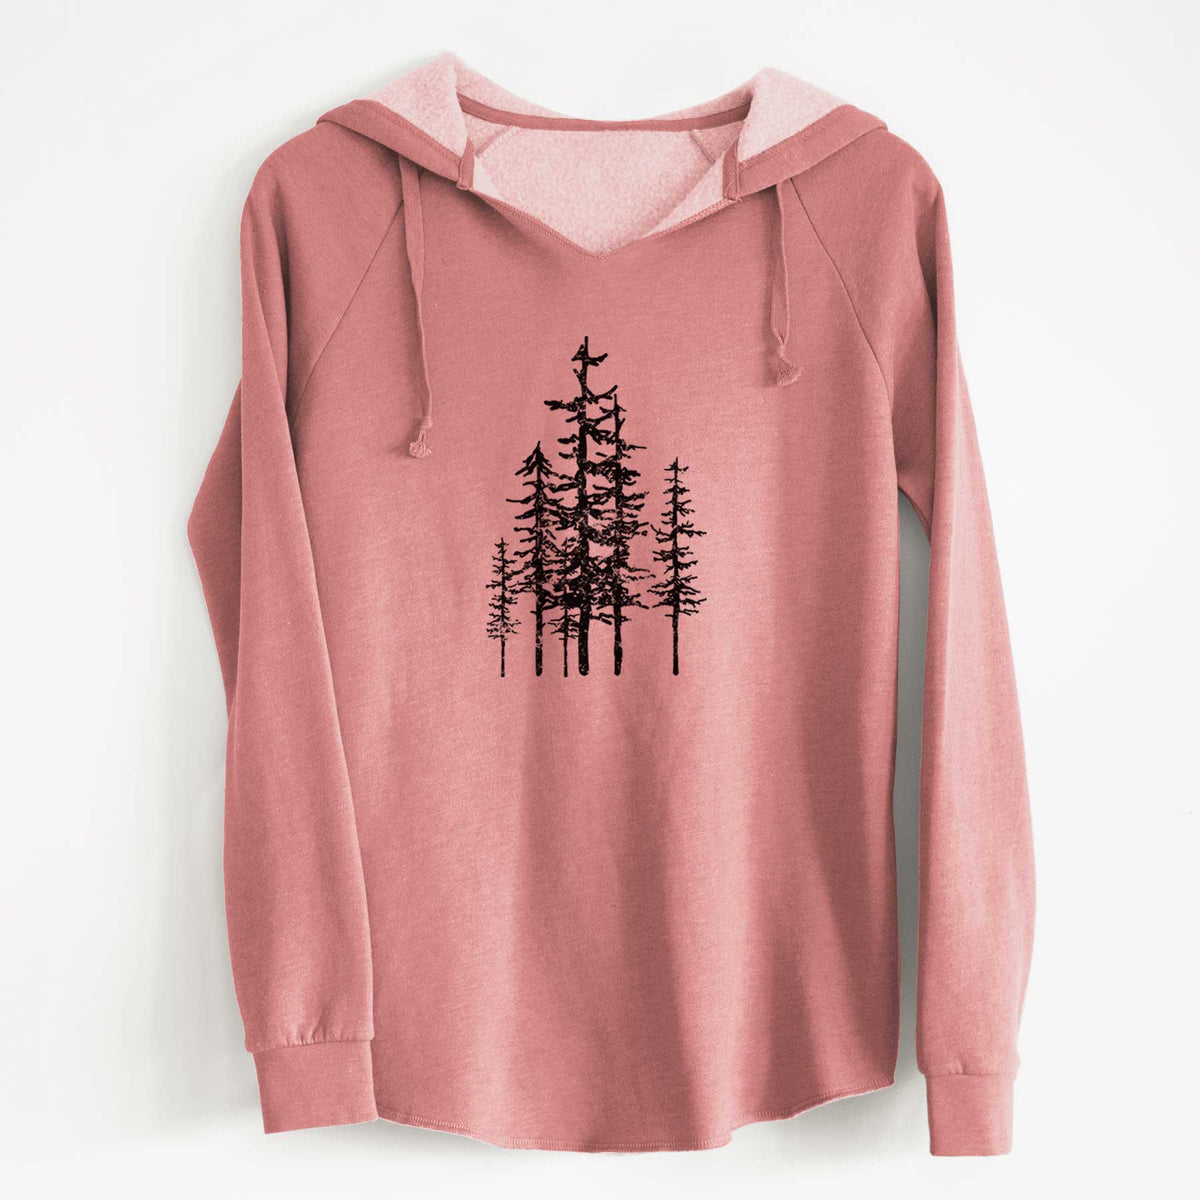 Evergreen Trees - Cali Wave Hooded Sweatshirt